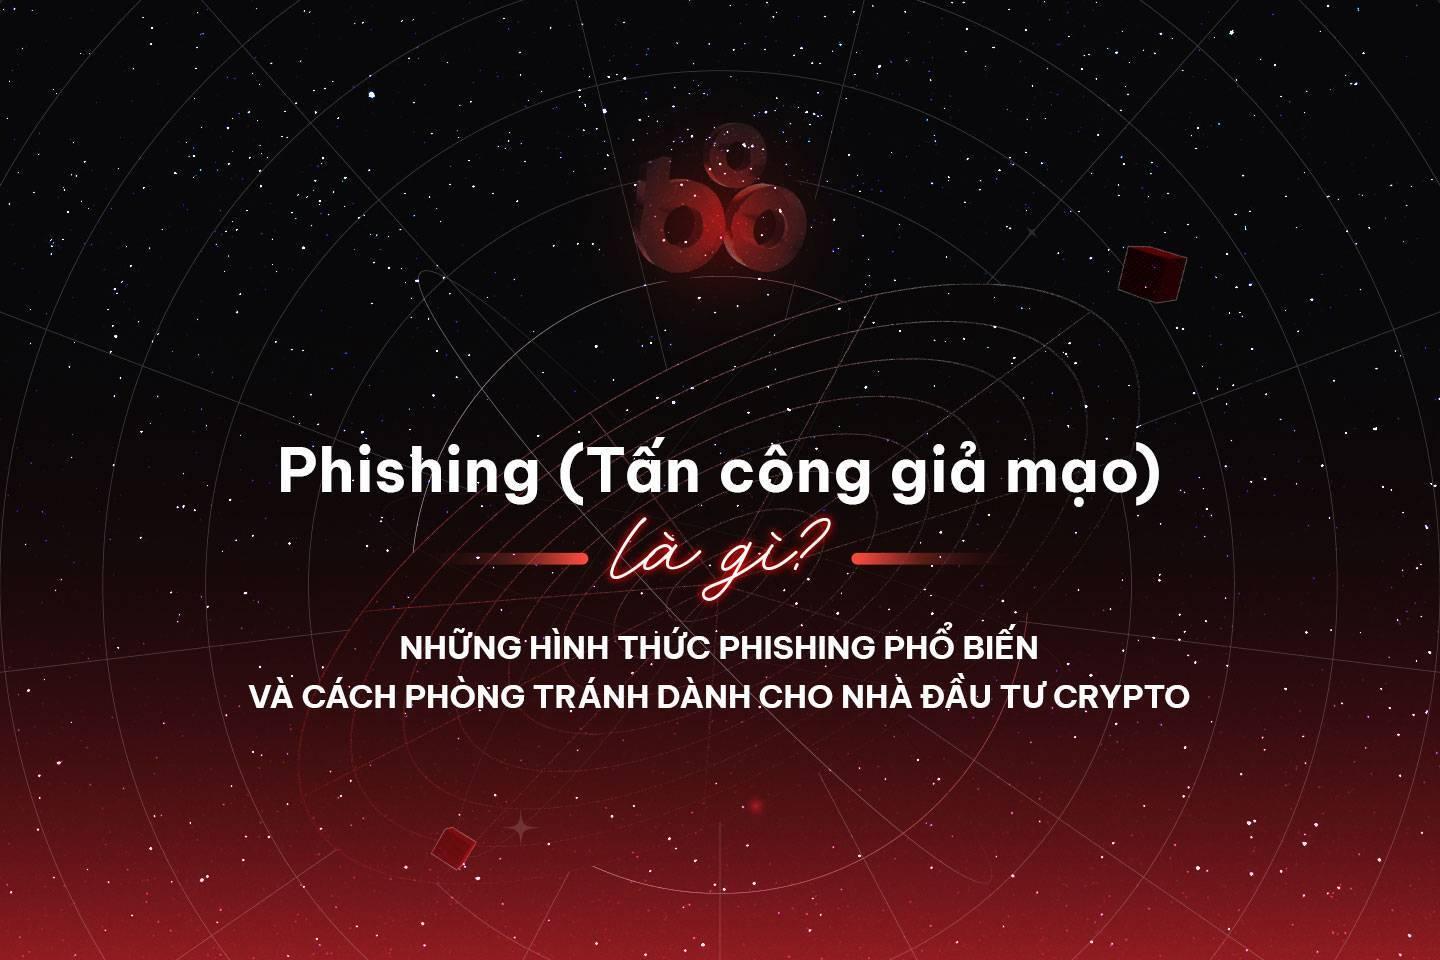 phishing-tan-cong-gia-mao-la-gi-nhung-hinh-thuc-phishing-pho-bien-va-cach-phong-tranh-danh-cho-nha-dau-tu-crypto